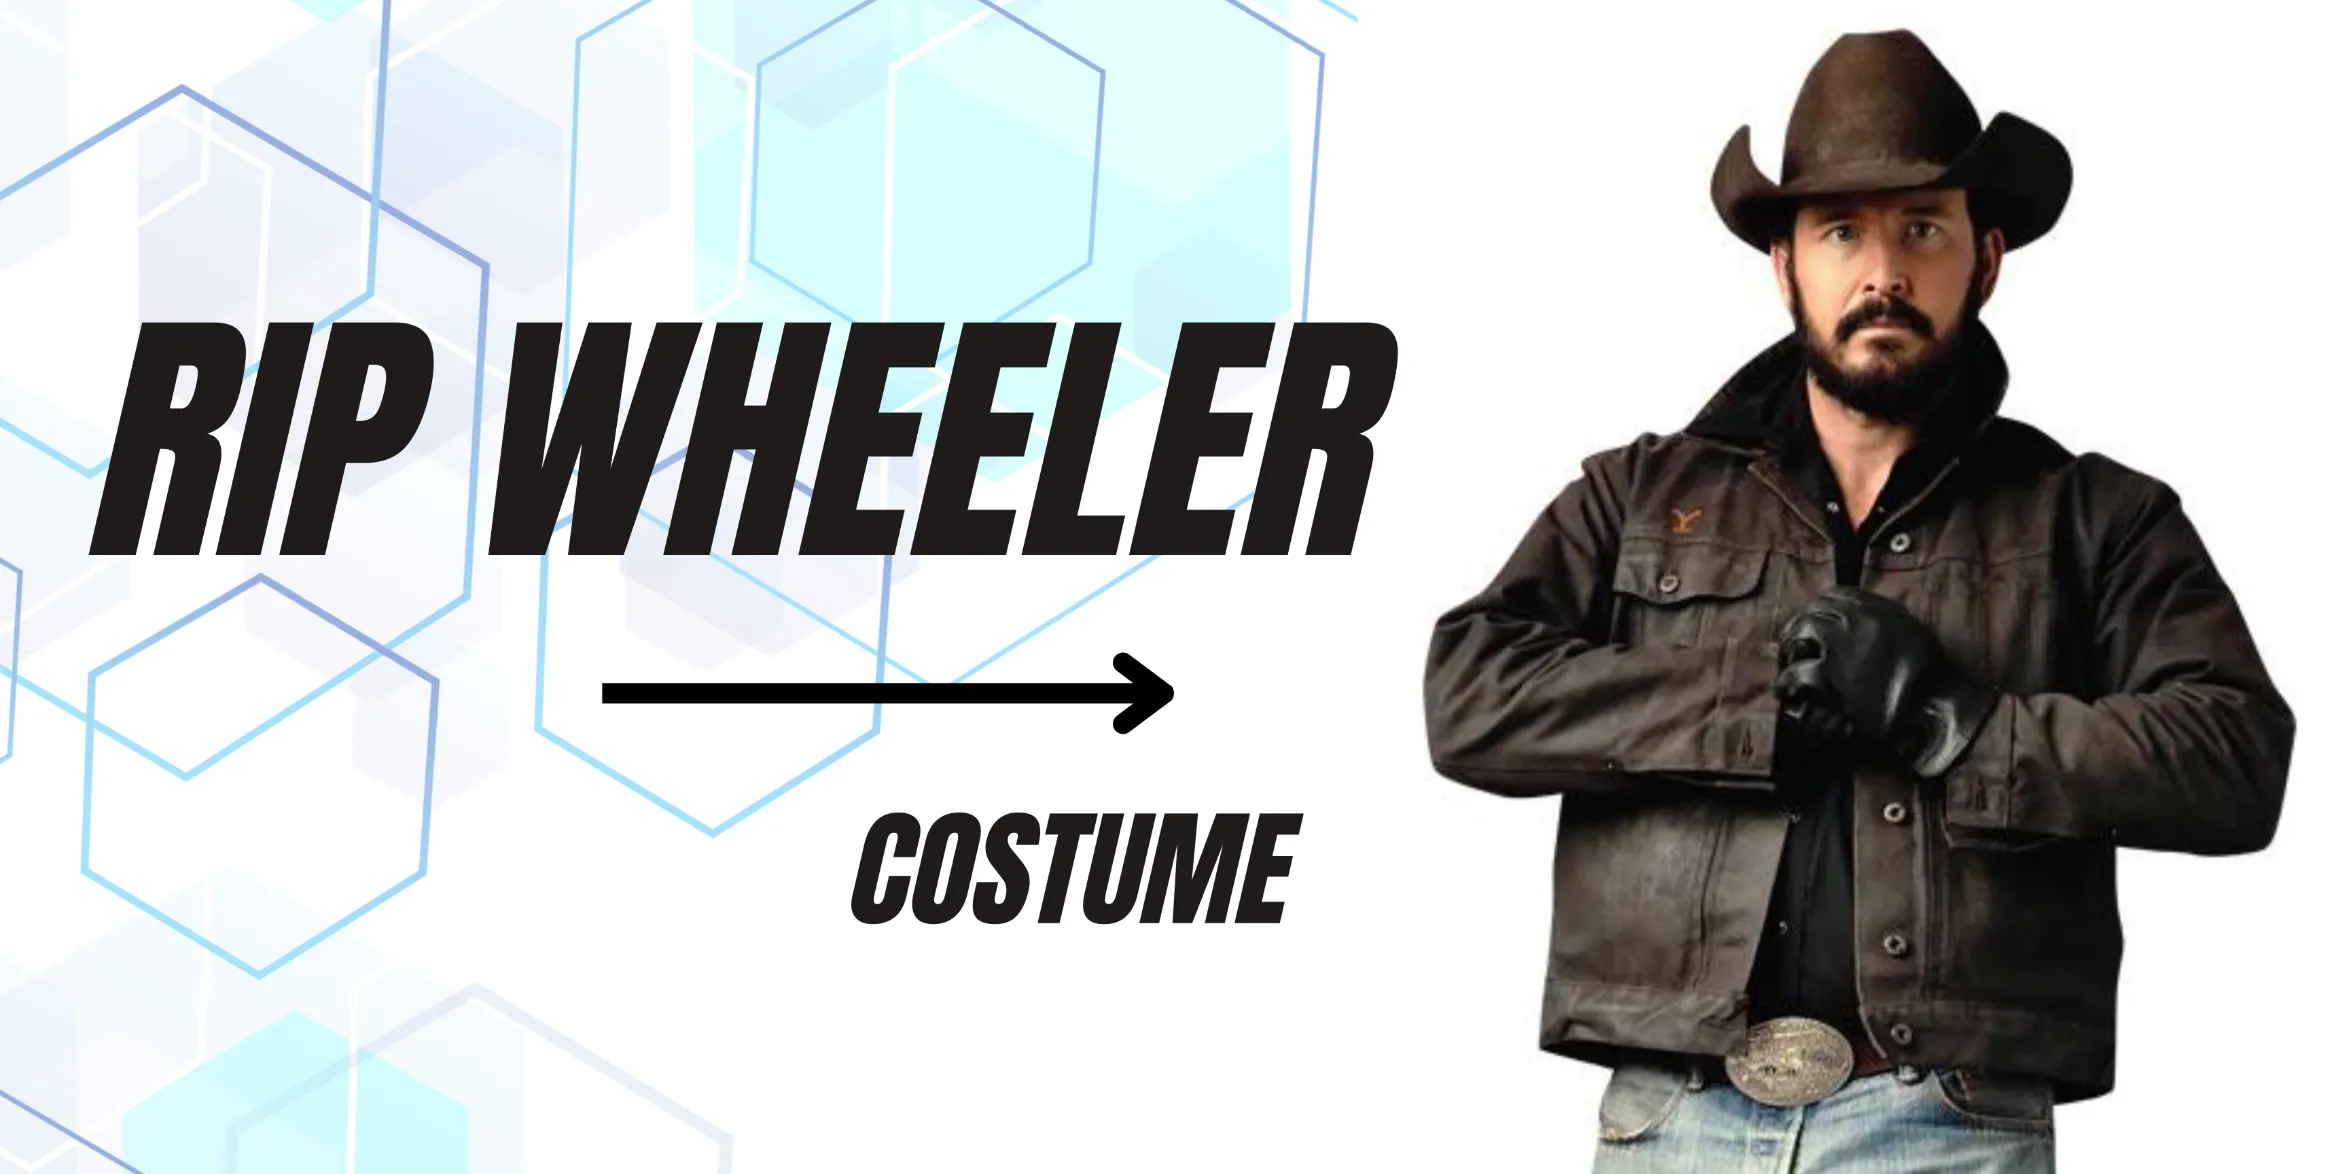 11 Best Rip Wheeler Costume Ideas To Copy This Halloween